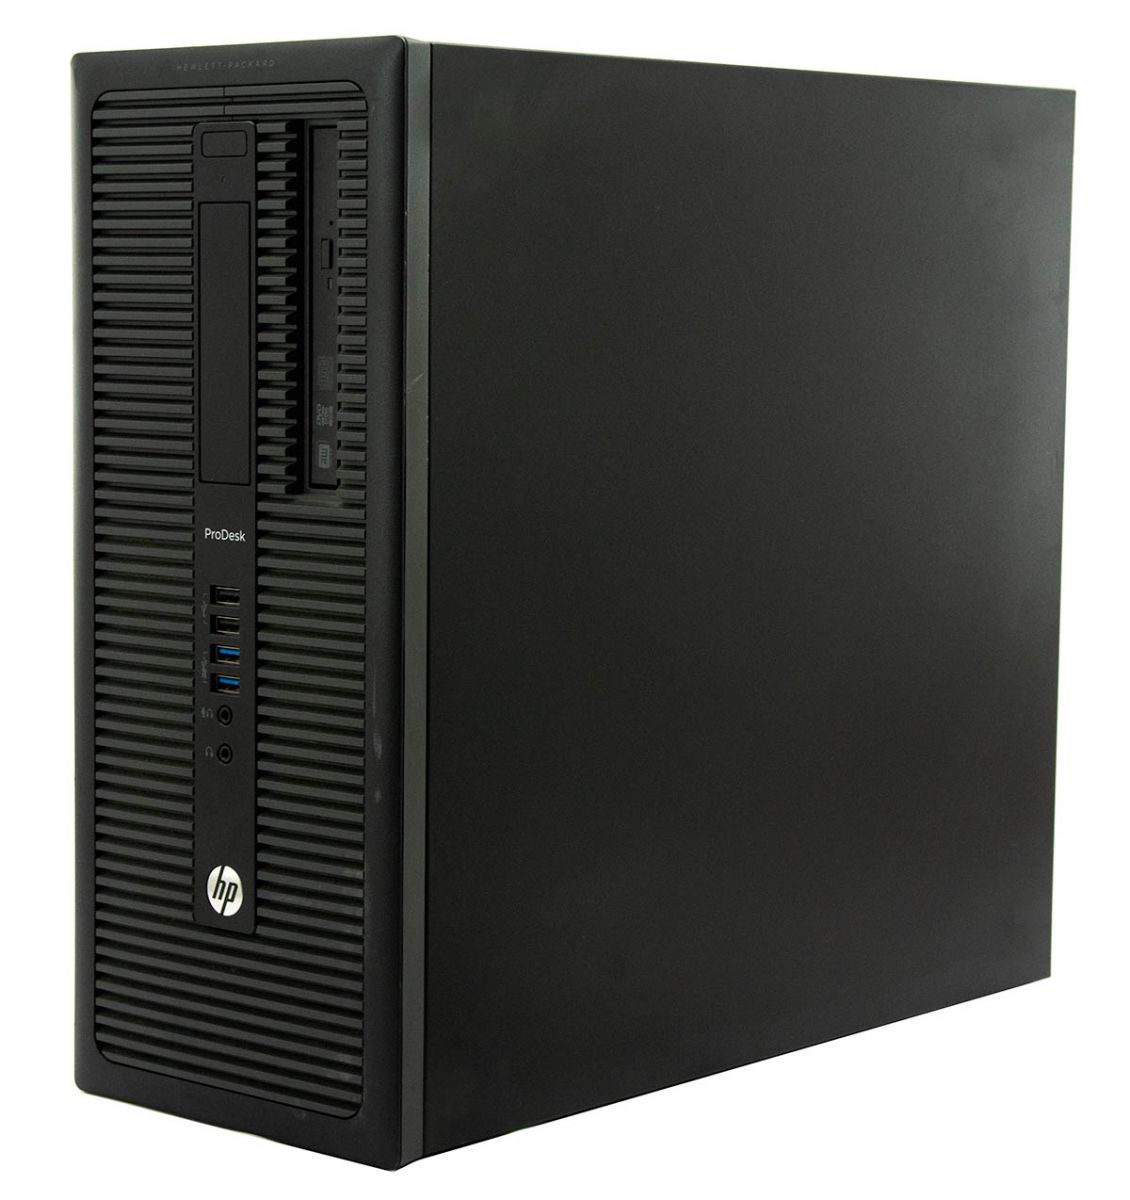 HP ProDesk 600 G1 Mini Tower Computer i5-4670 Windows 10